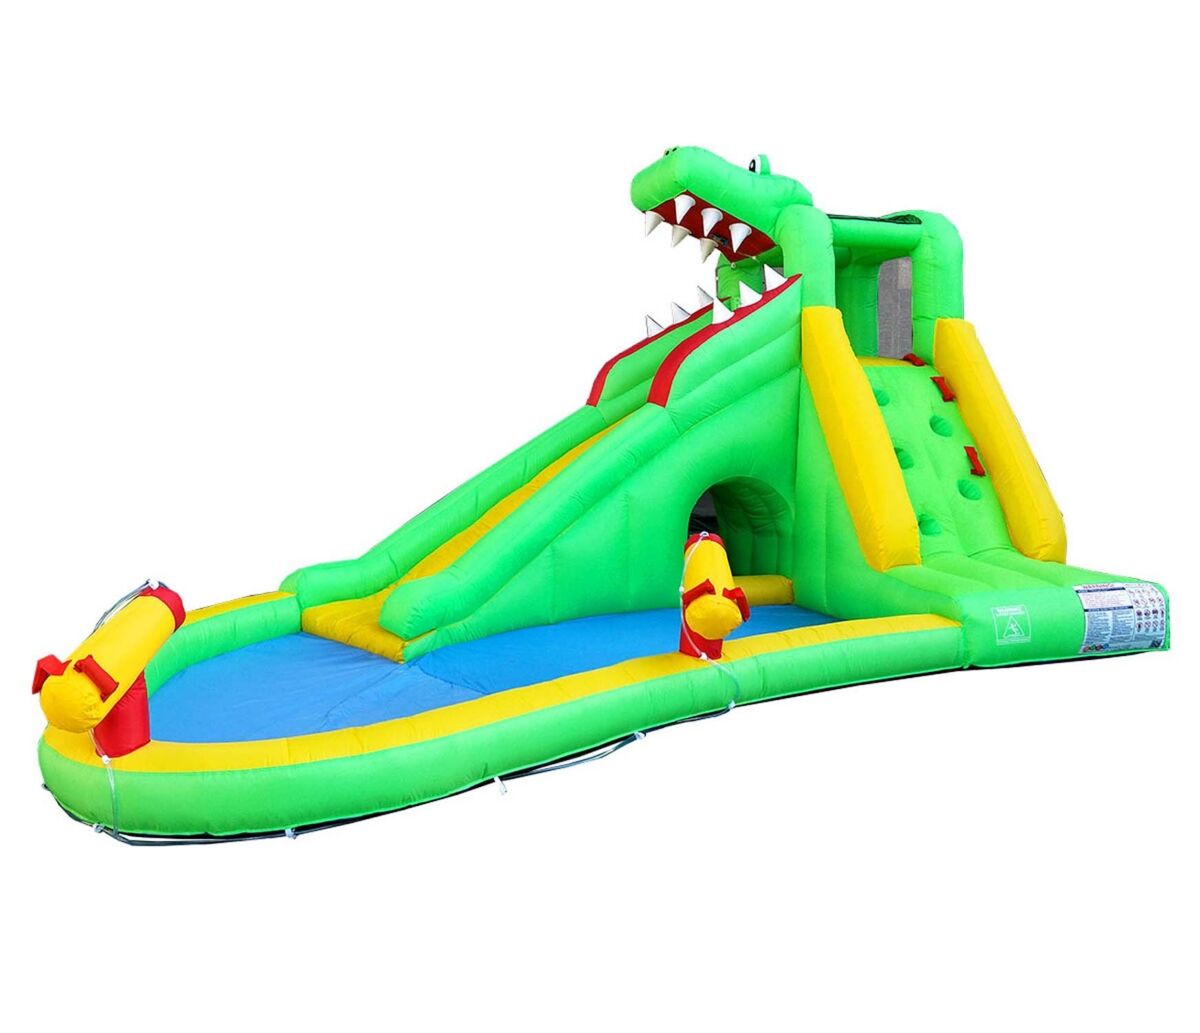 Pogo Bounce House Backyard Kids Gator Inflatable Water Park for Kids - Green Alligator Theme w/ Dual Water Cannons, Splash Pool, Rock Climbing Wall, &